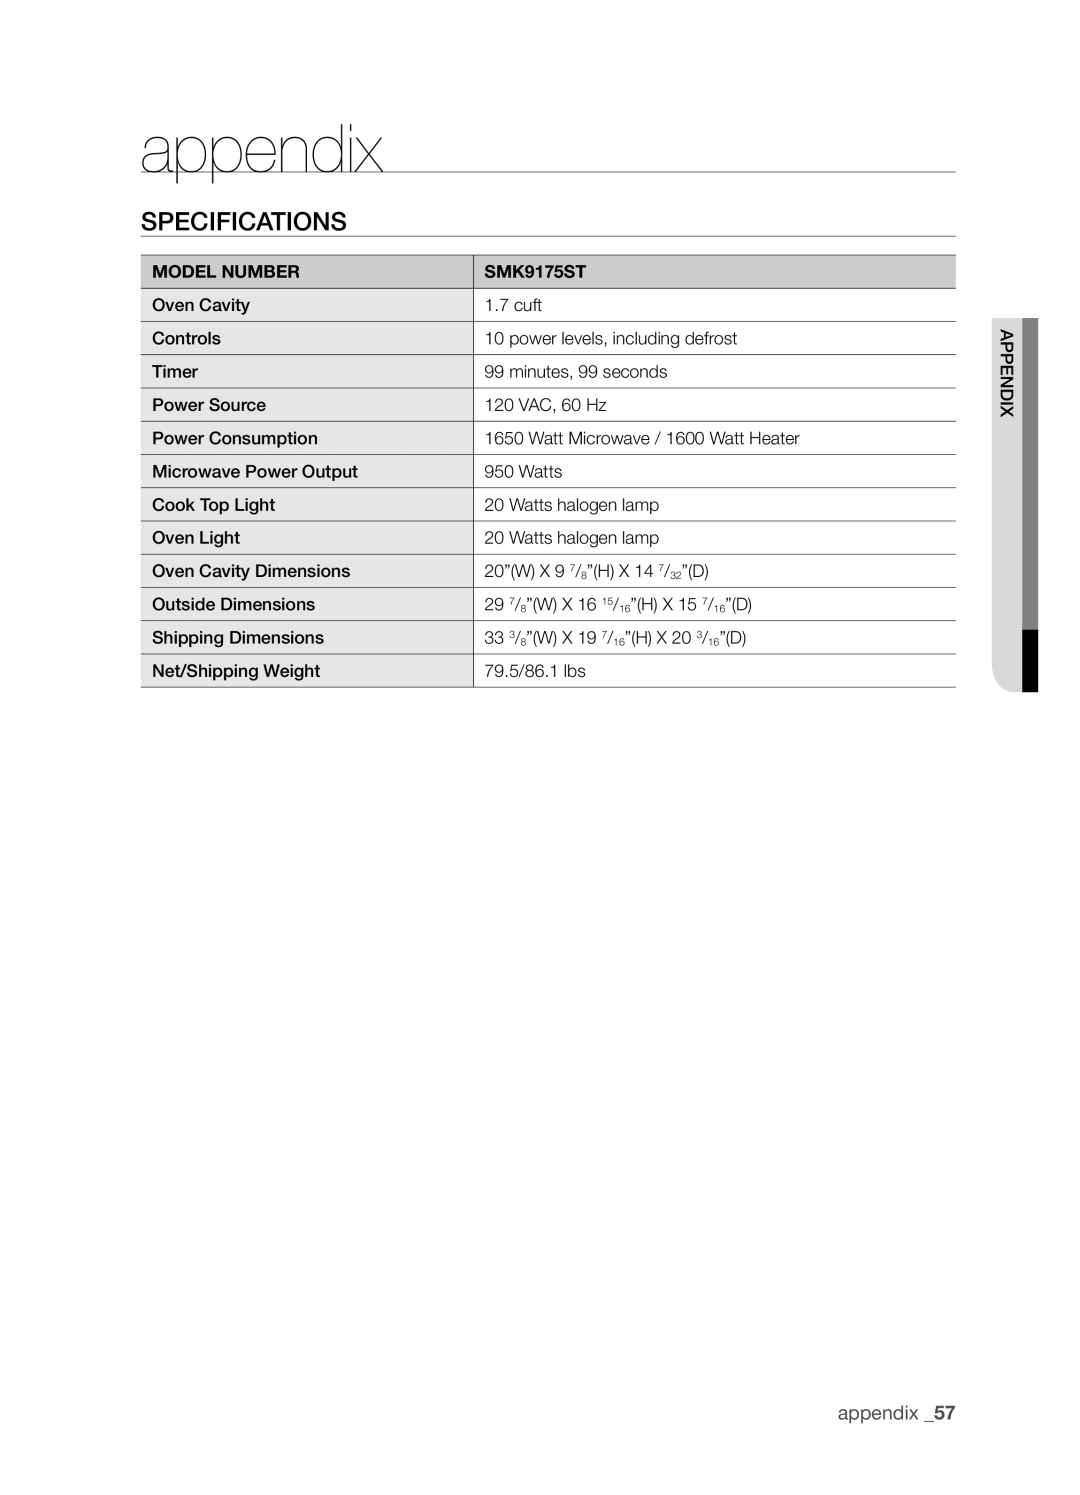 Samsung user manual appendix, Specifications, Model Number, SMK9175ST 